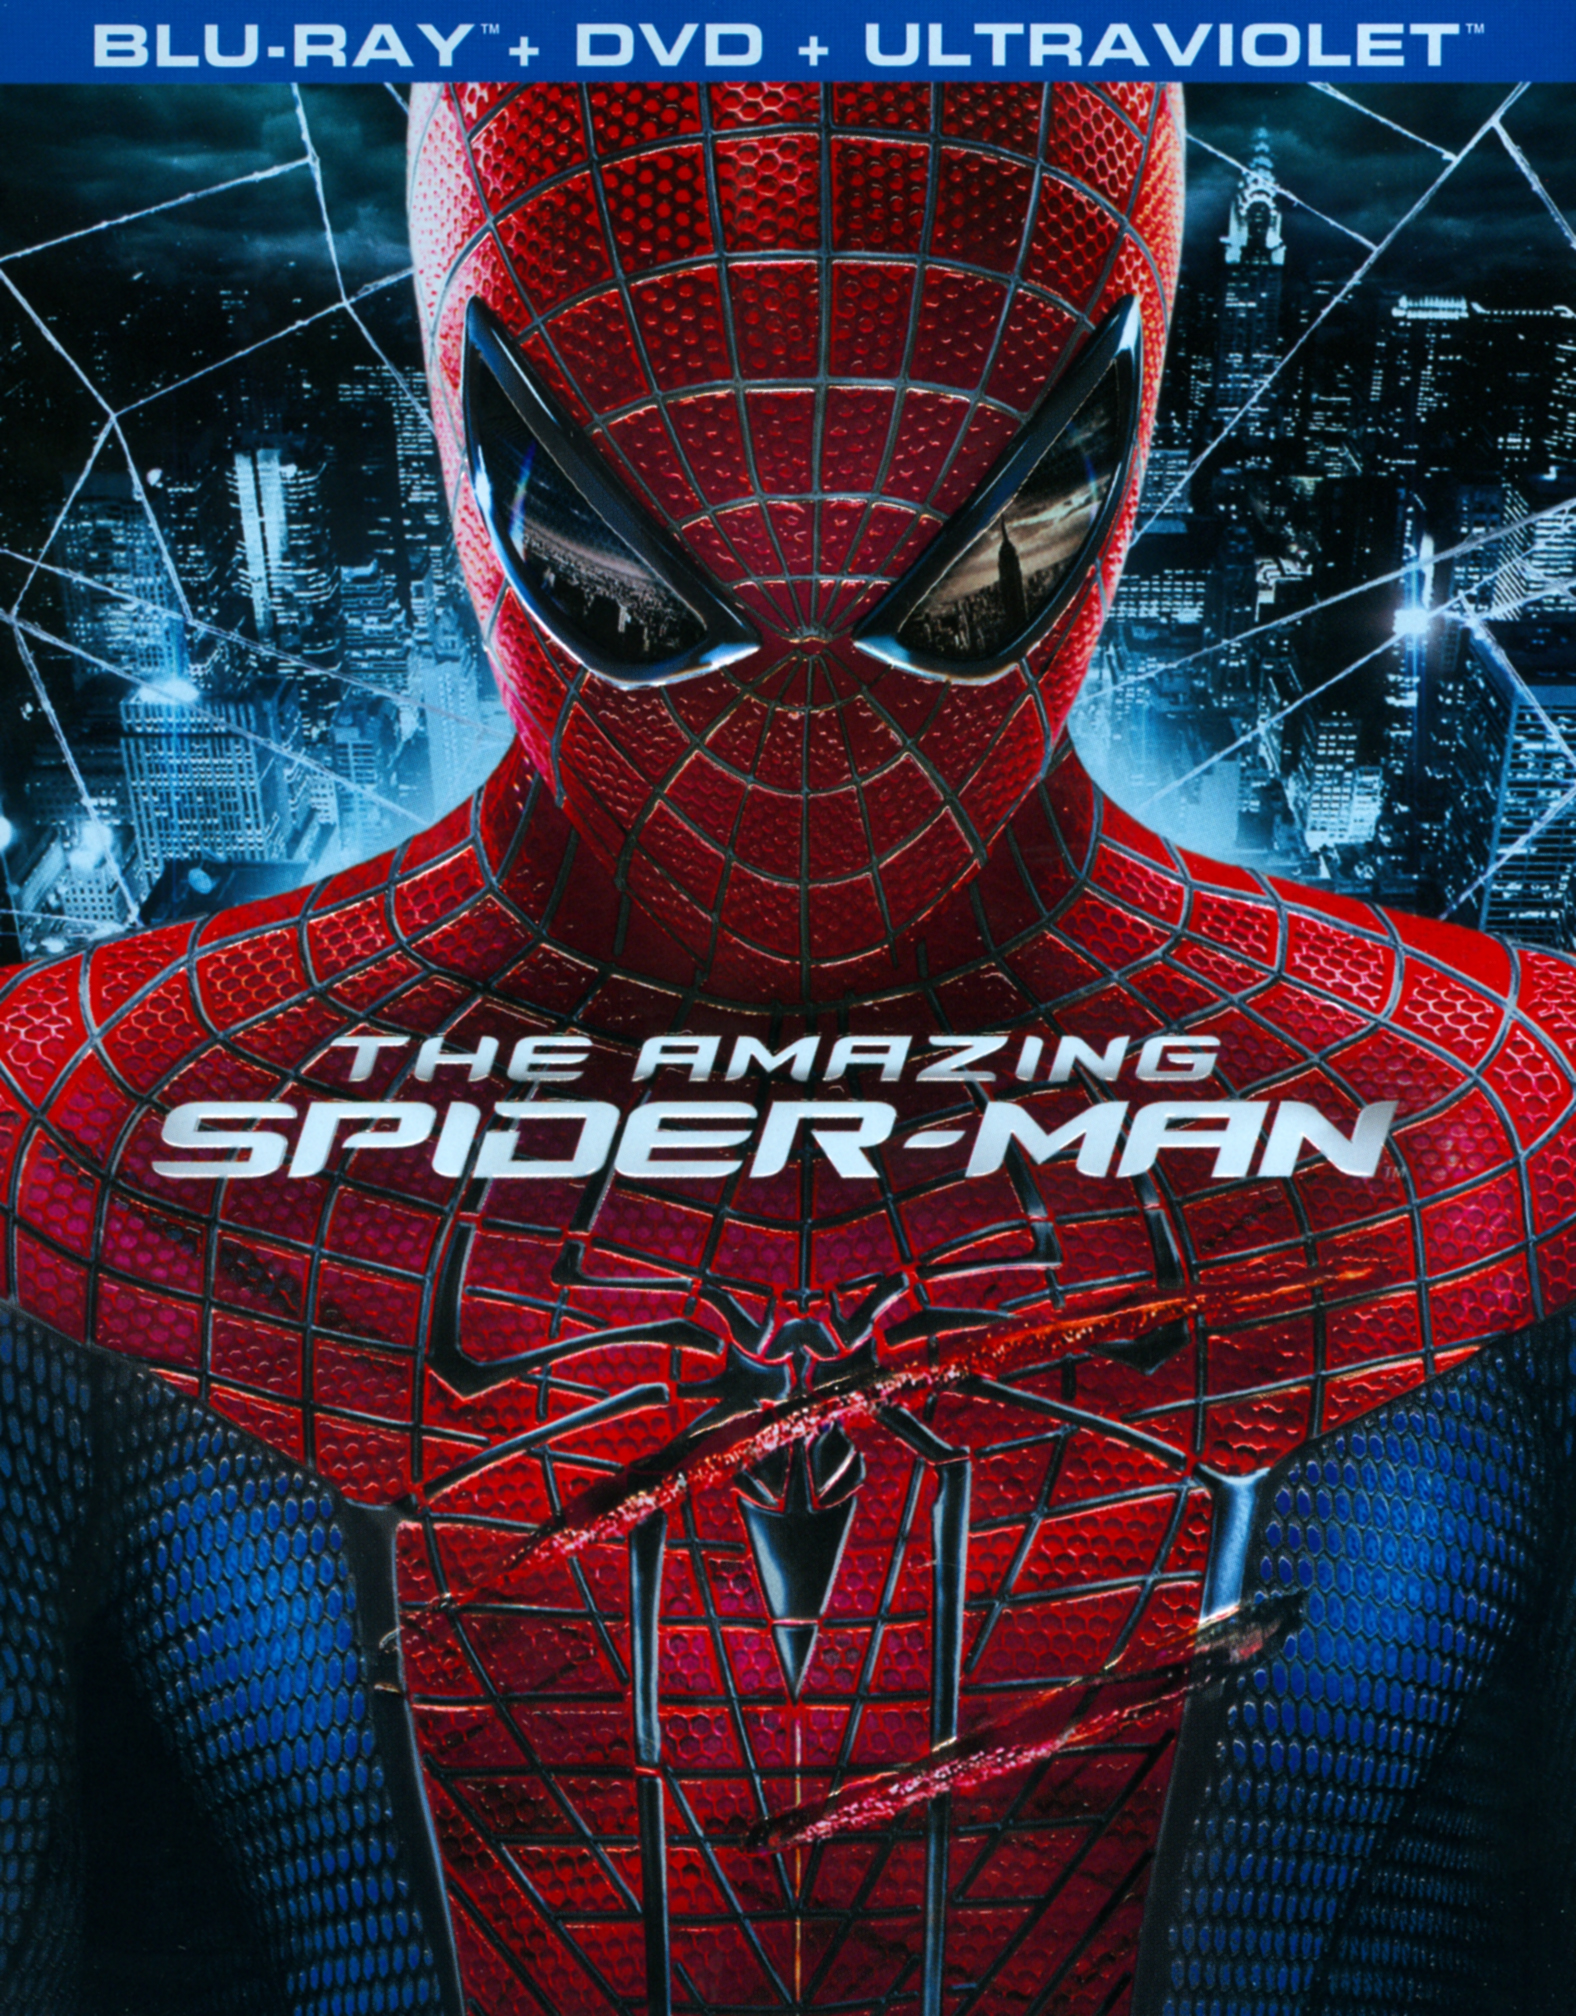 rit Pef kalender The Amazing Spider-Man [3 Discs] [Includes Digital Copy] [Blu-ray/DVD]  [2012] - Best Buy